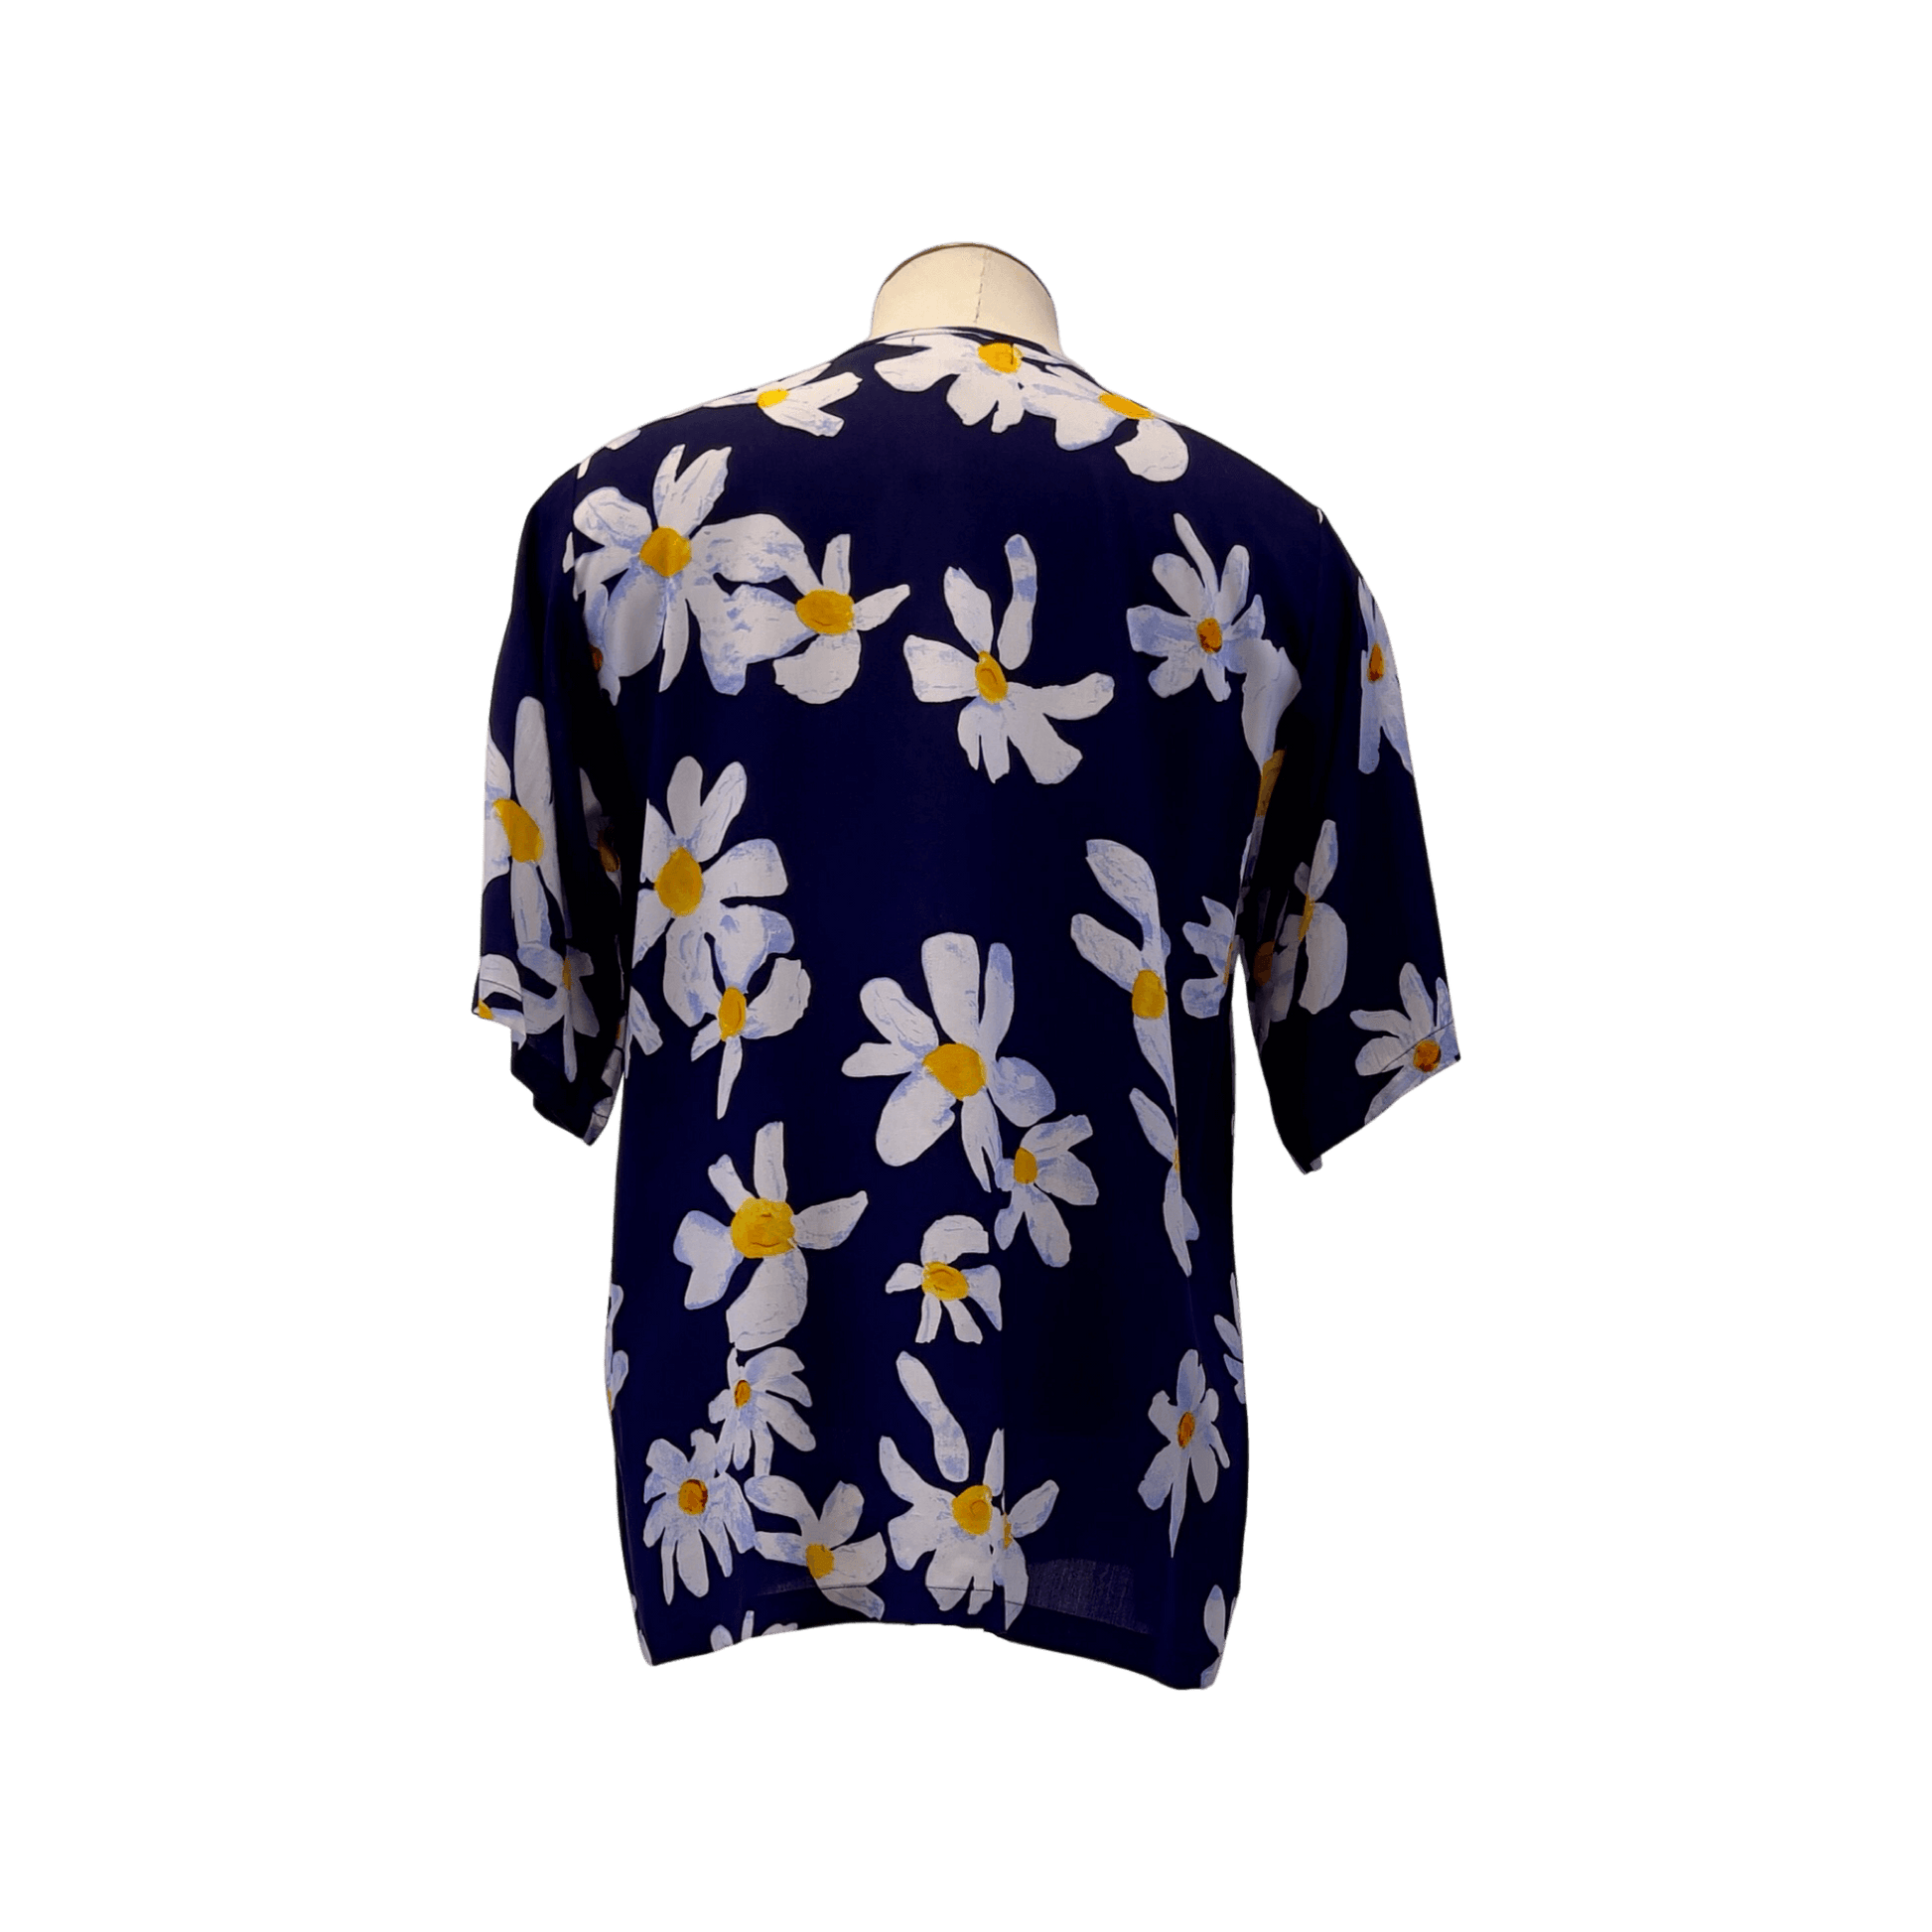 Bloom Clothing NZ,FRESH DAISY TOP - Navy,$189.00,